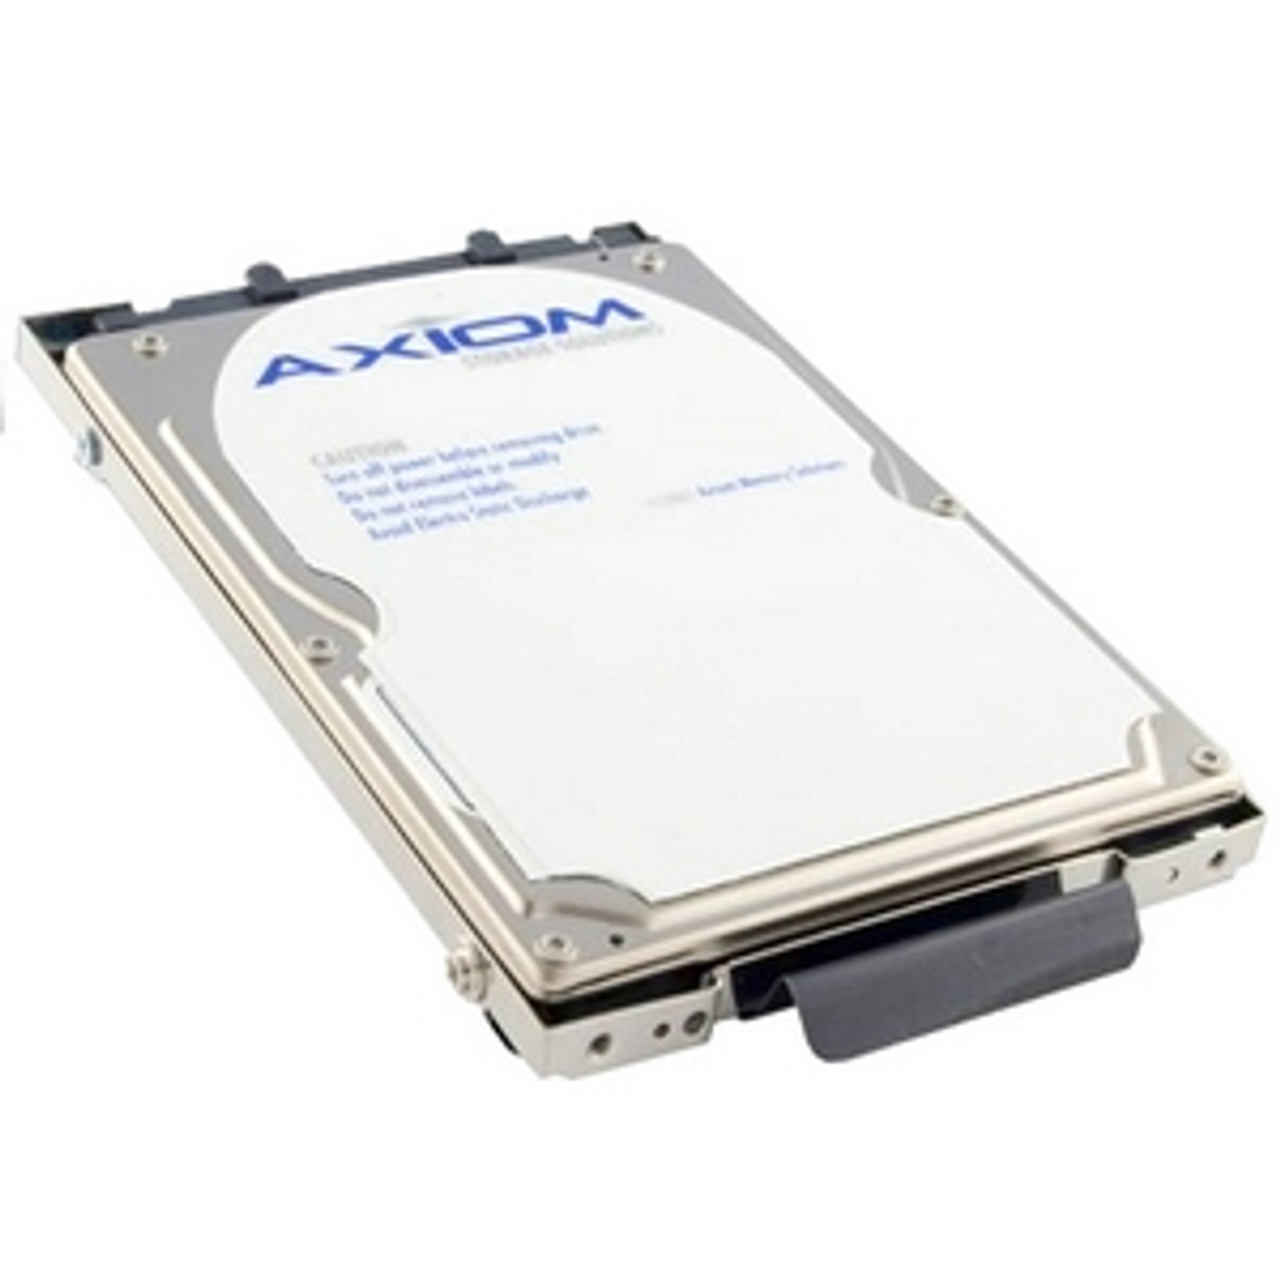 AXD-1640 - Axiom 40 GB 2.5 Plug-in Module Hard Drive - IDE